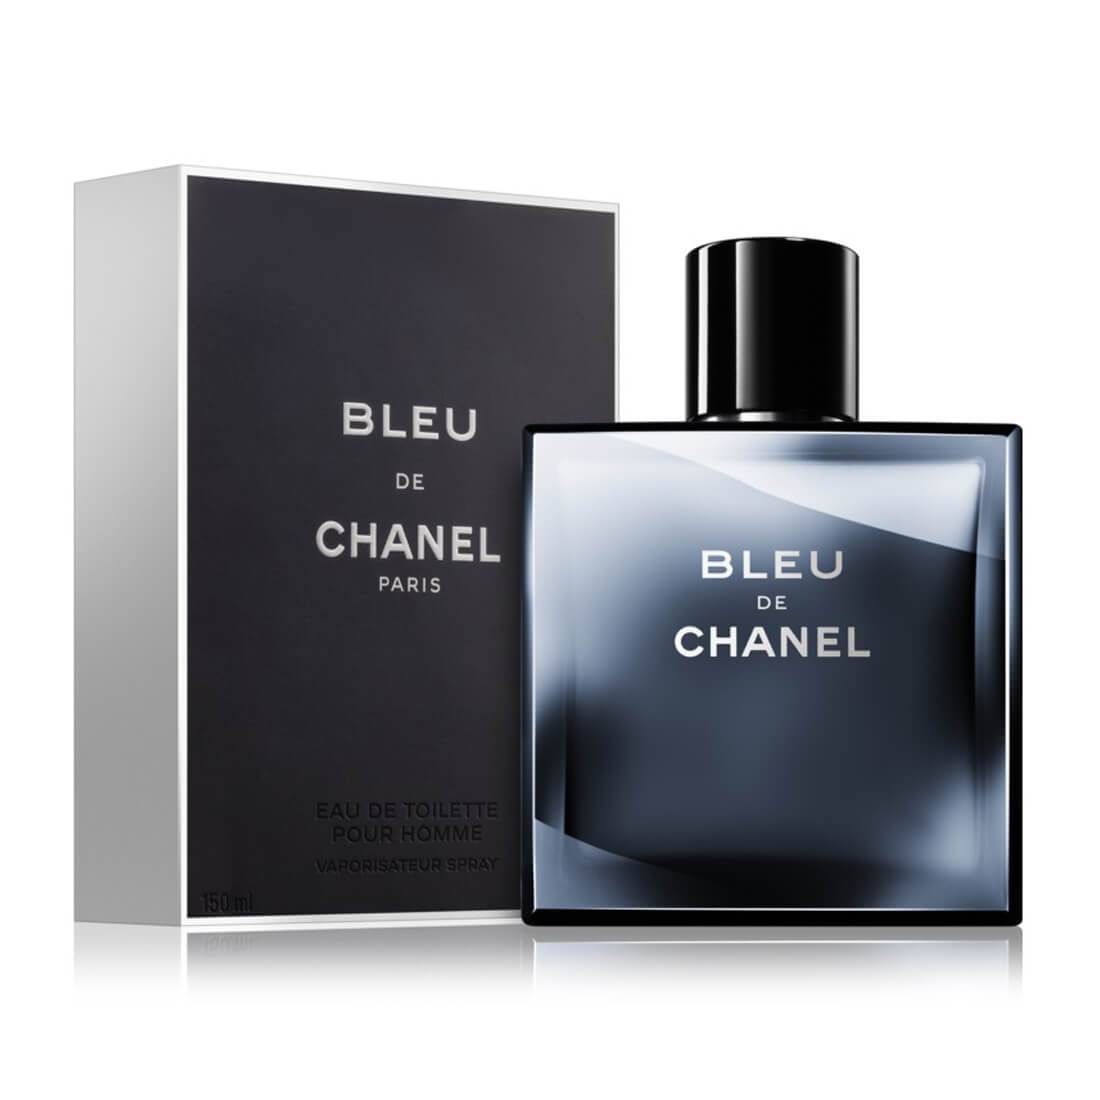 Chanel – Bleu de Chanel EDT – 150ML – The Perfume HQ, Ghana